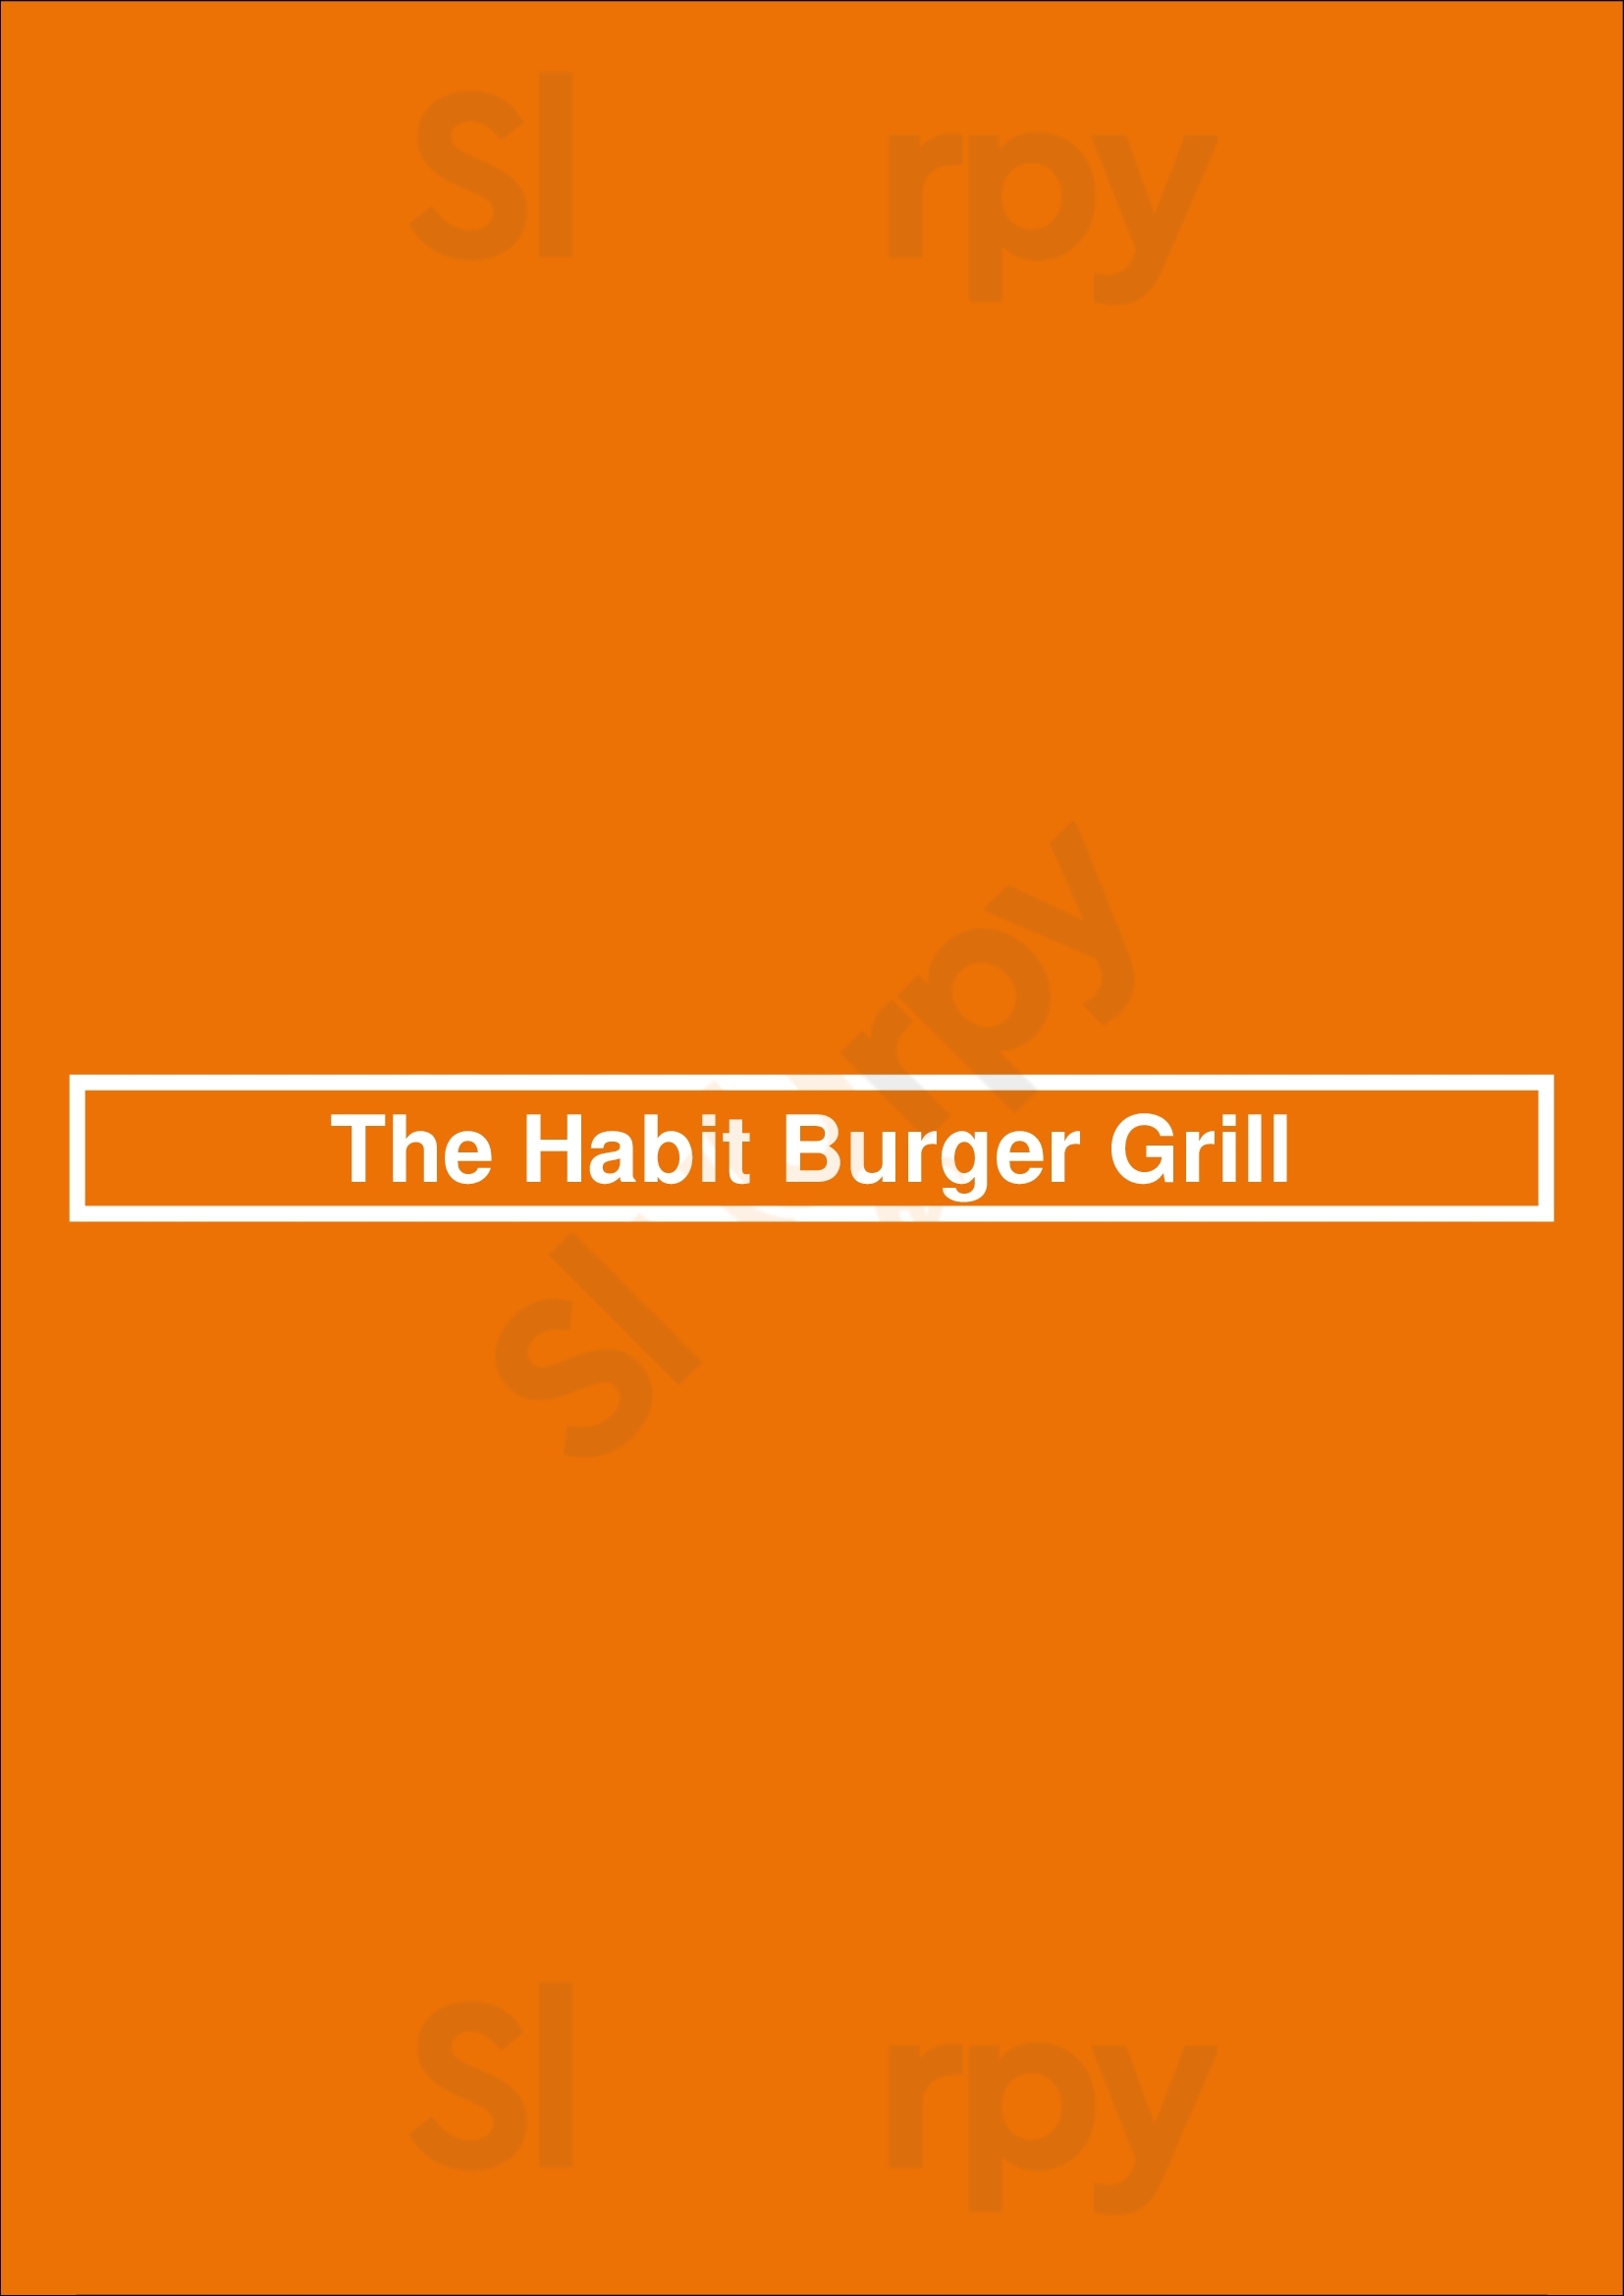 The Habit Burger Grill Phoenix Menu - 1